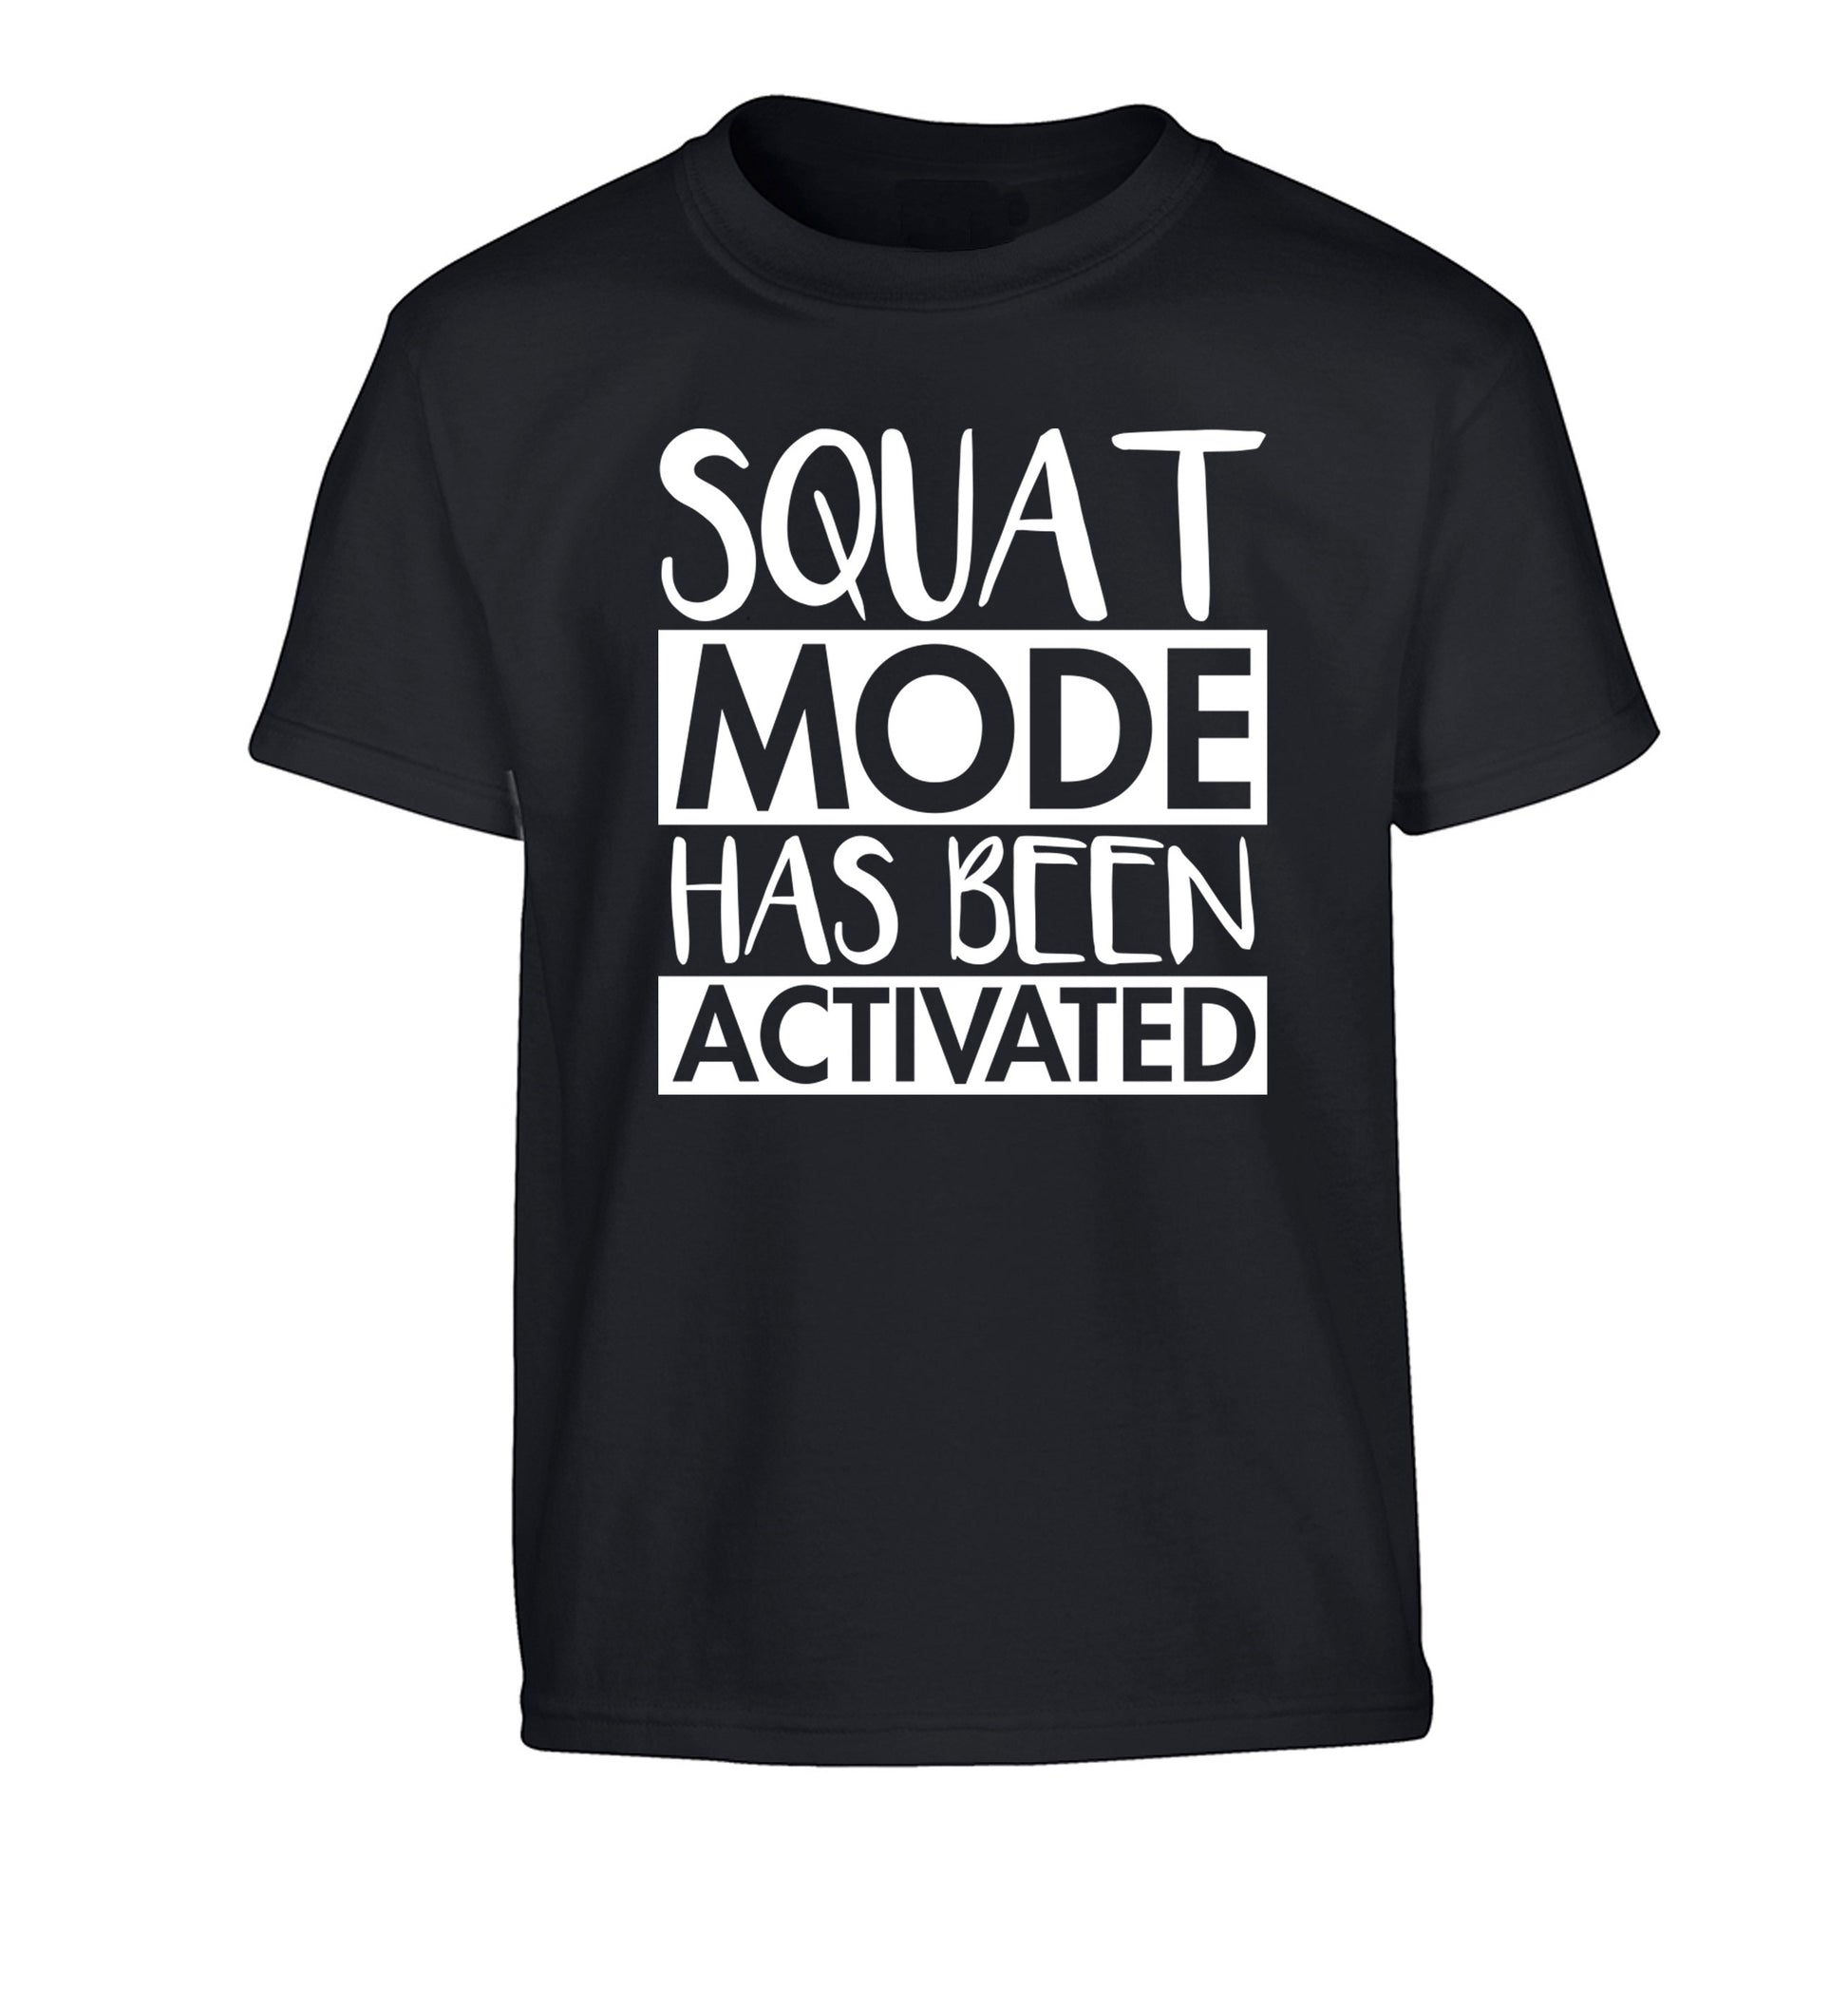 Squat mode activated Children's black Tshirt 12-14 Years